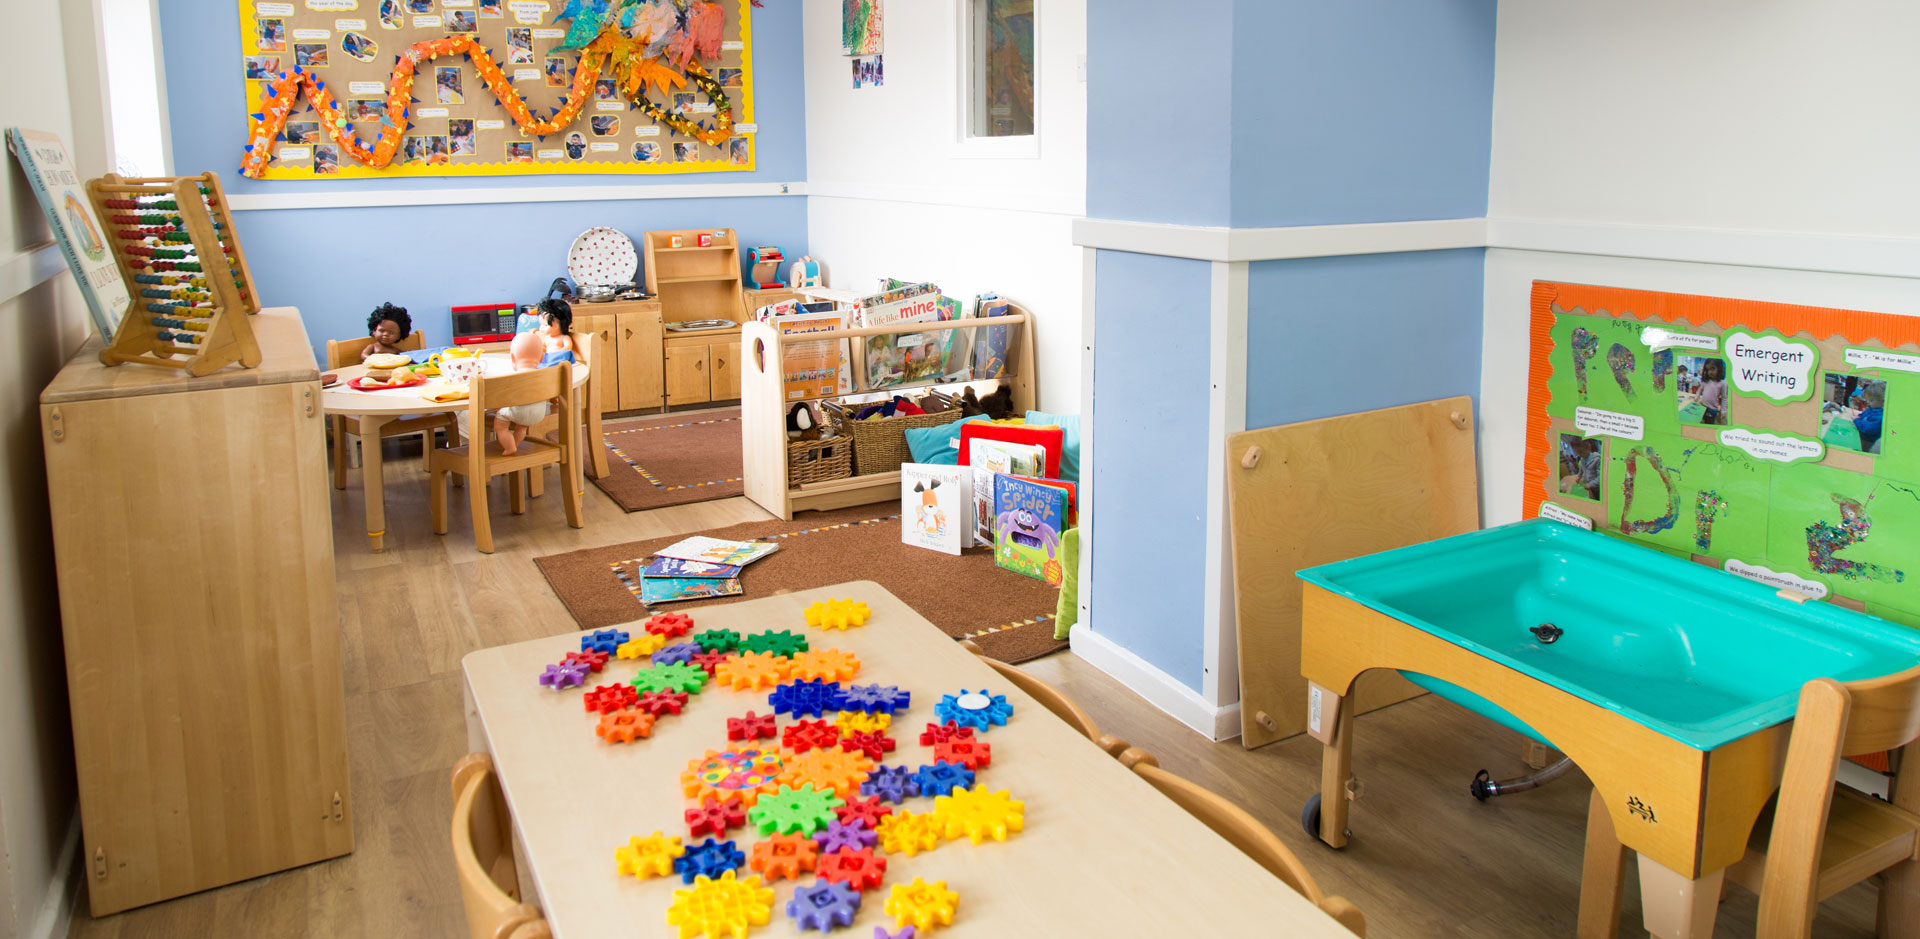 Mount Vernon Day Nursery and Preschool